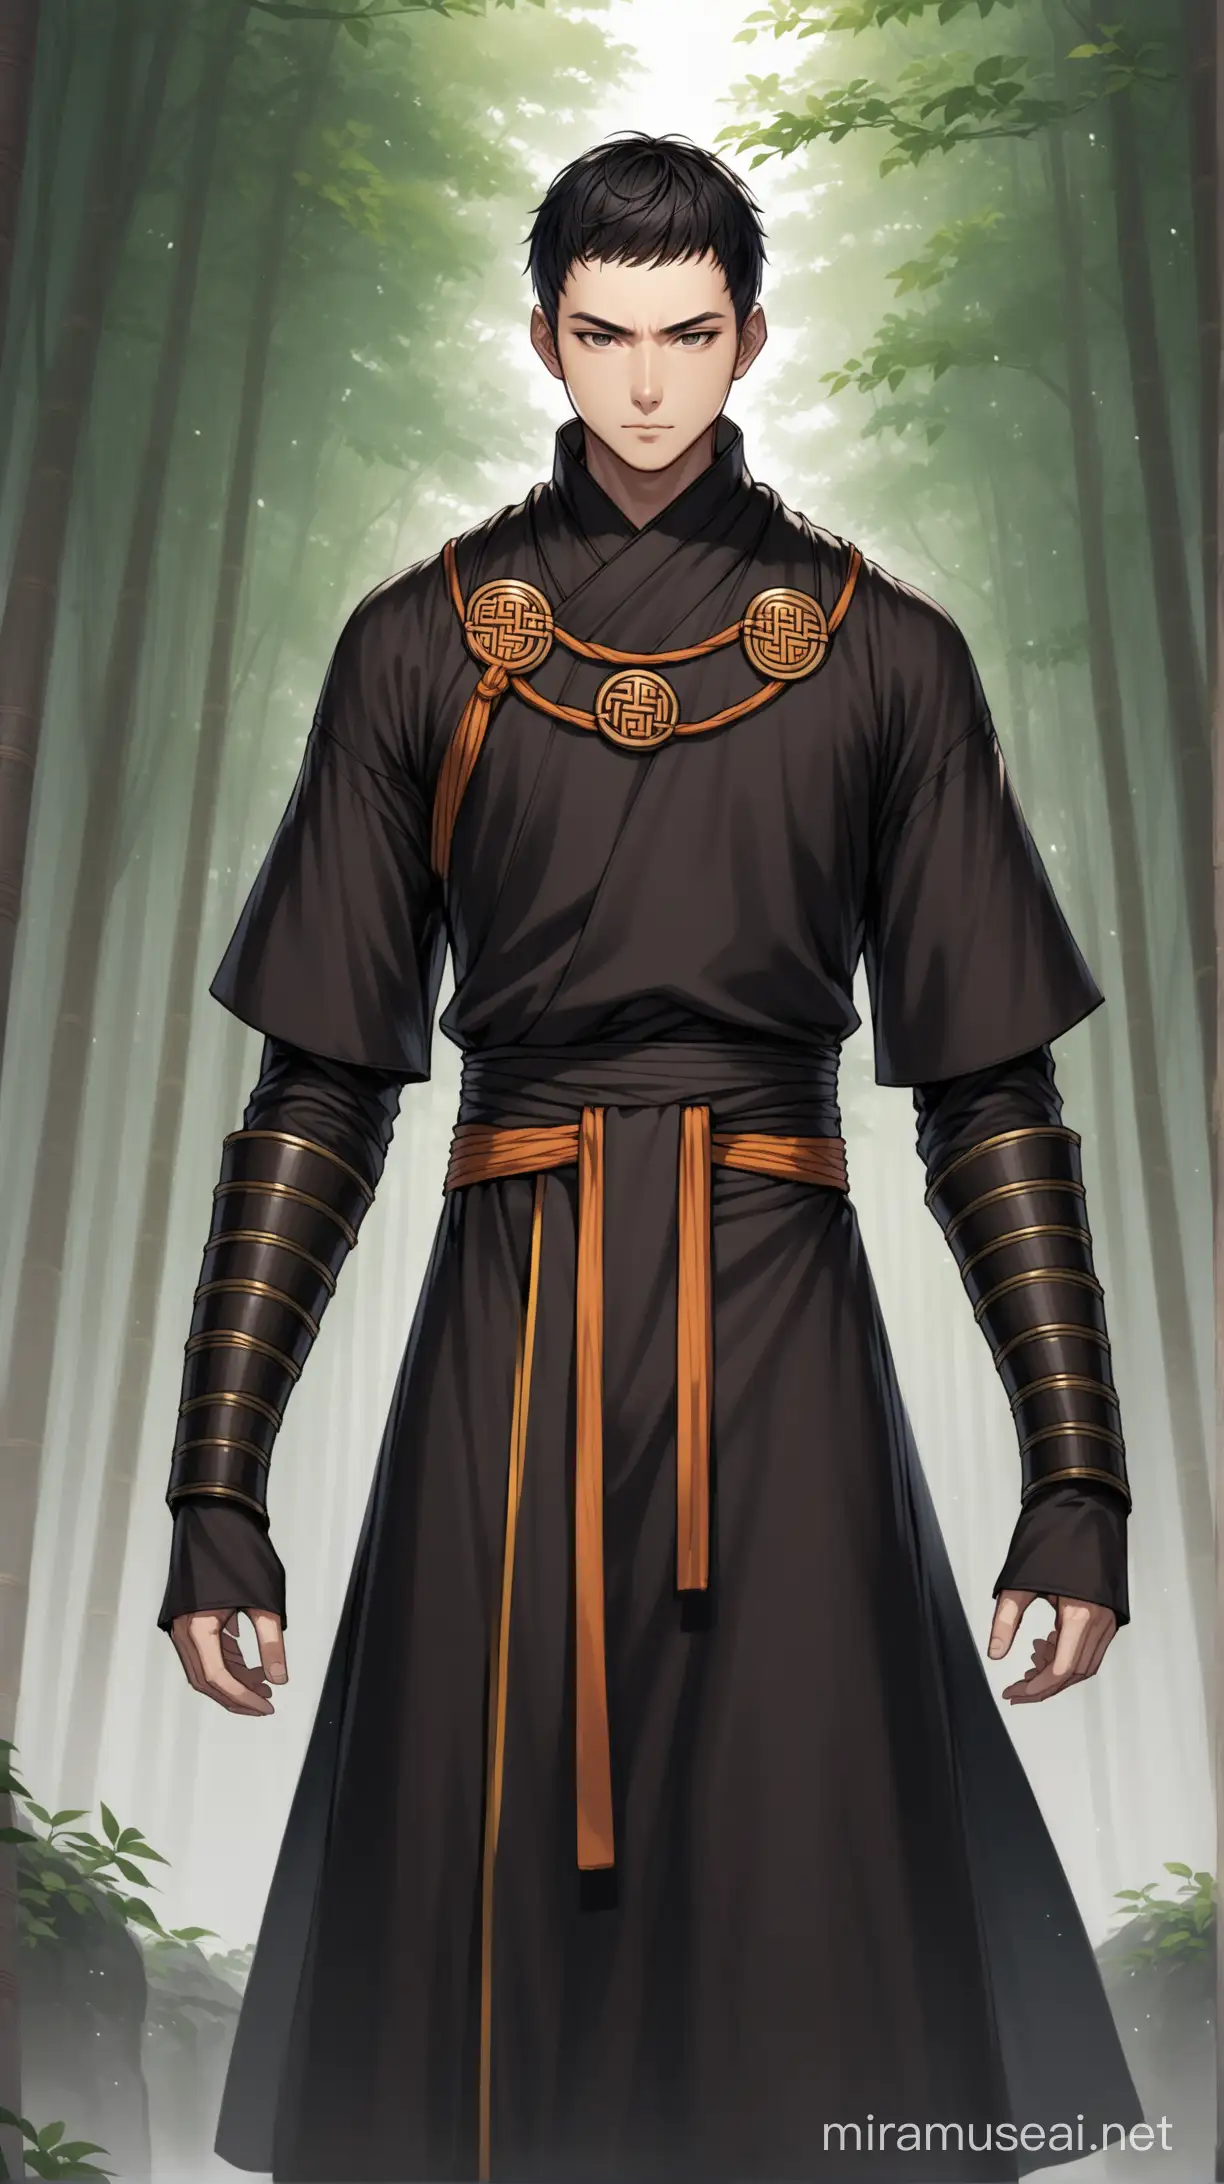 A human male with short dark hair wearing black warrior monk robes